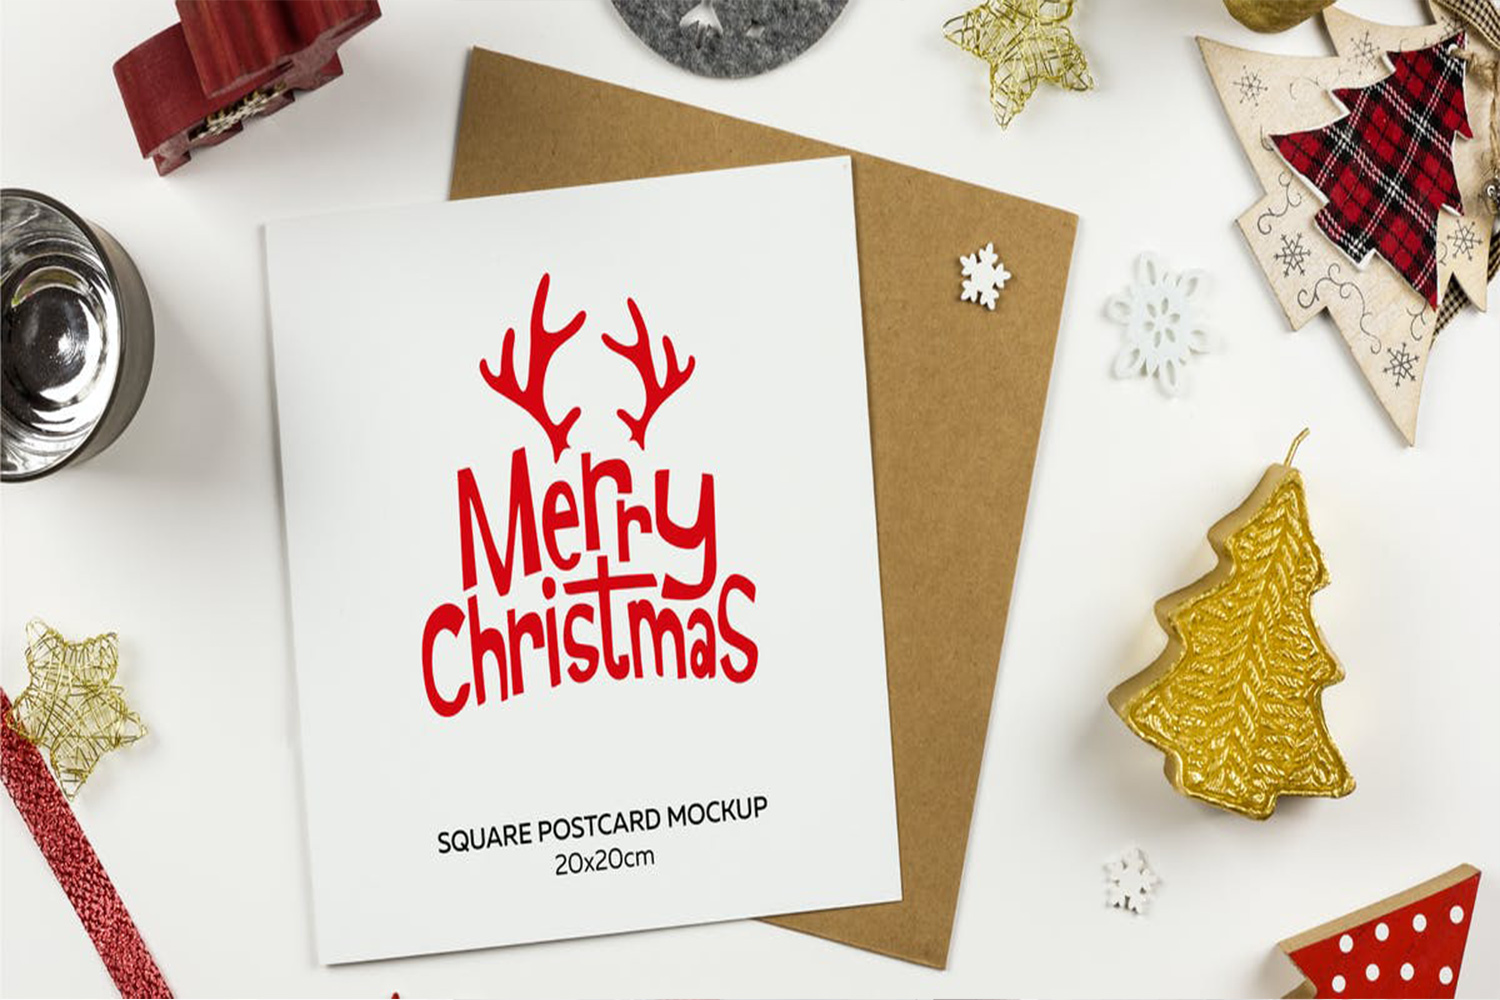 Square Postcard for Christmas Mockup Free Download